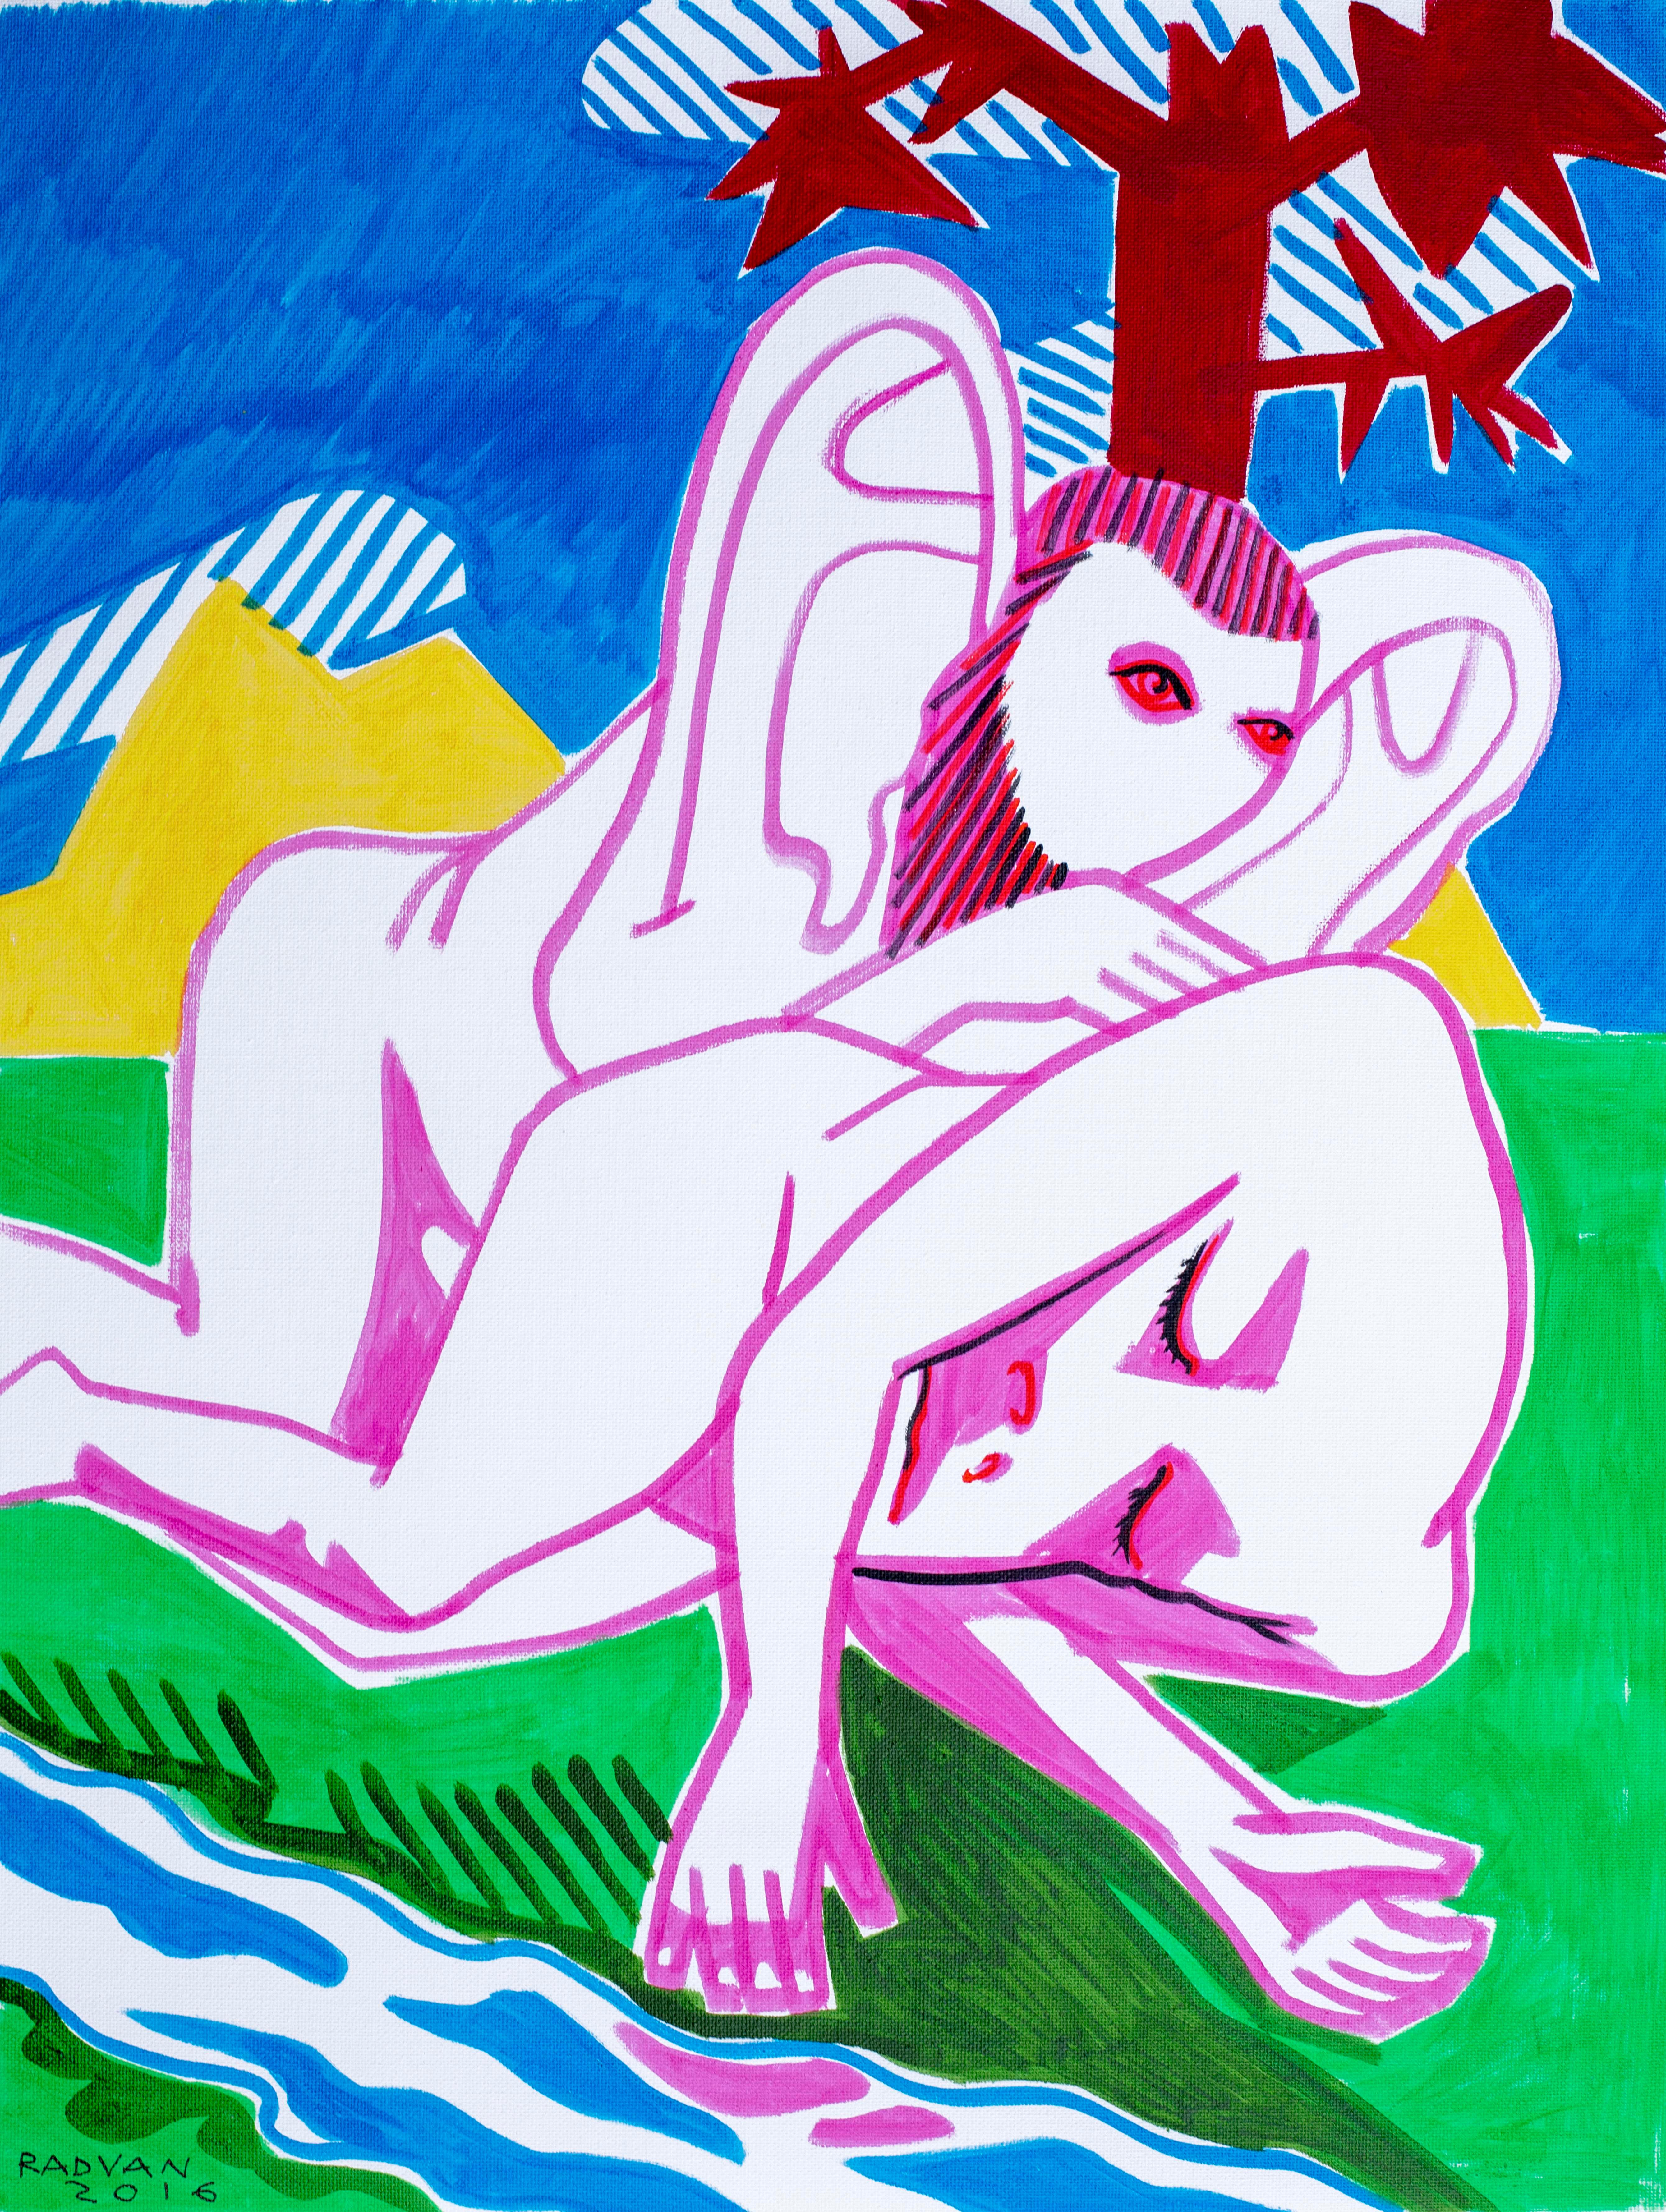 VI Mythologique (Panot et Blem) - Art Contemporary, Blue, Green, Nude, Pink